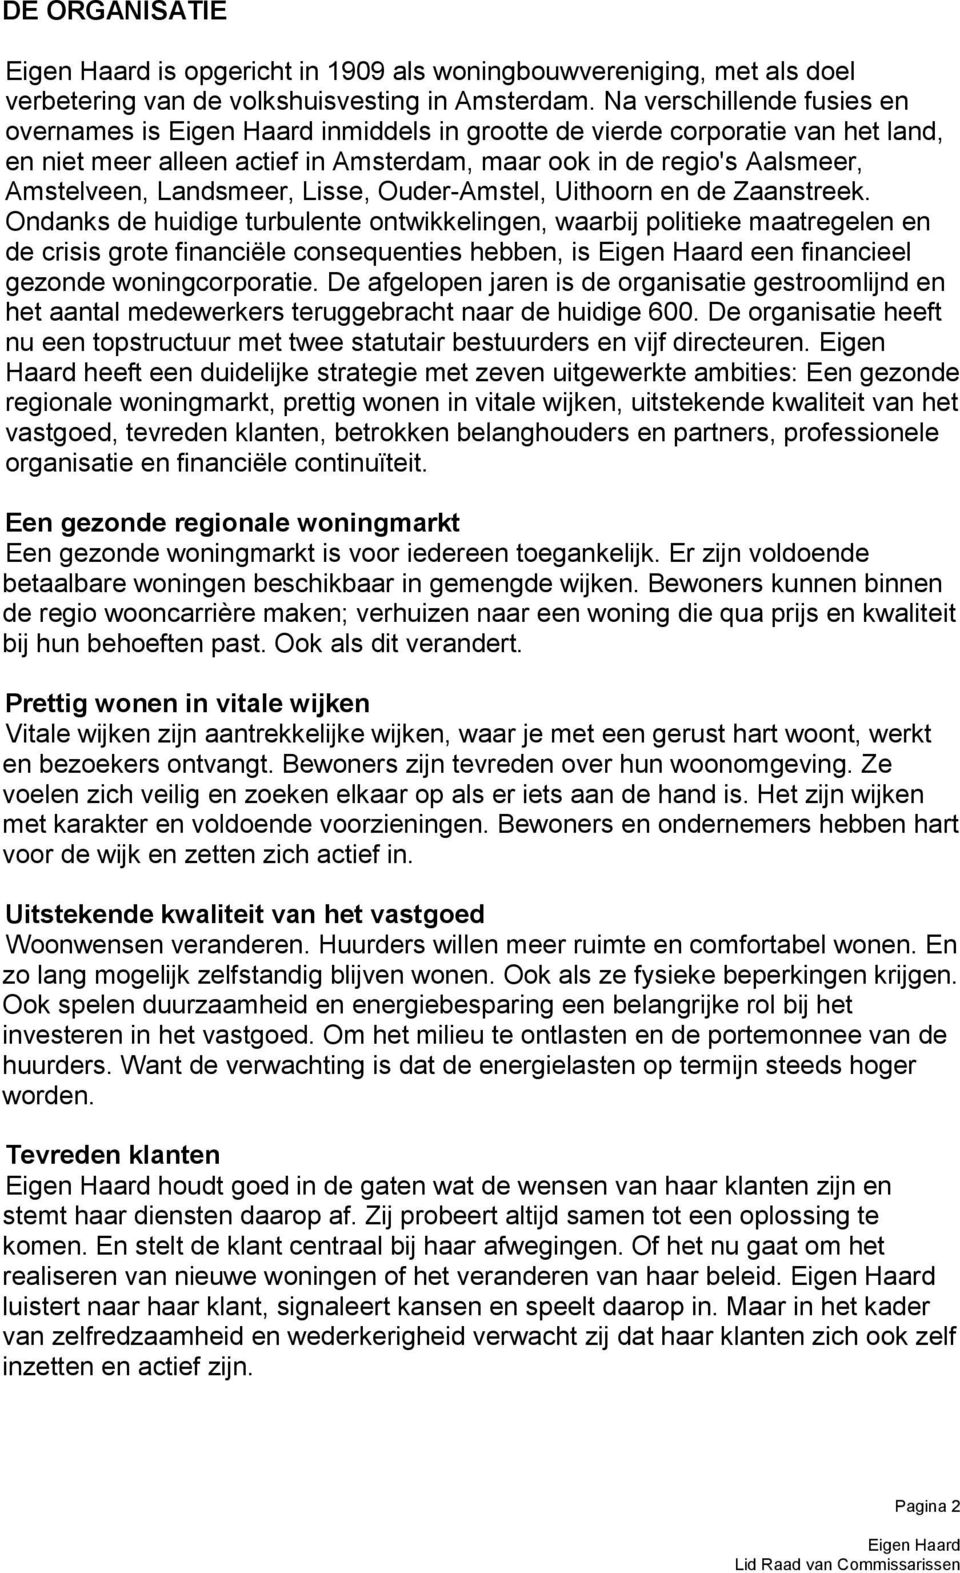 Ouder-Amstel, Uithoorn en de Zaanstreek.